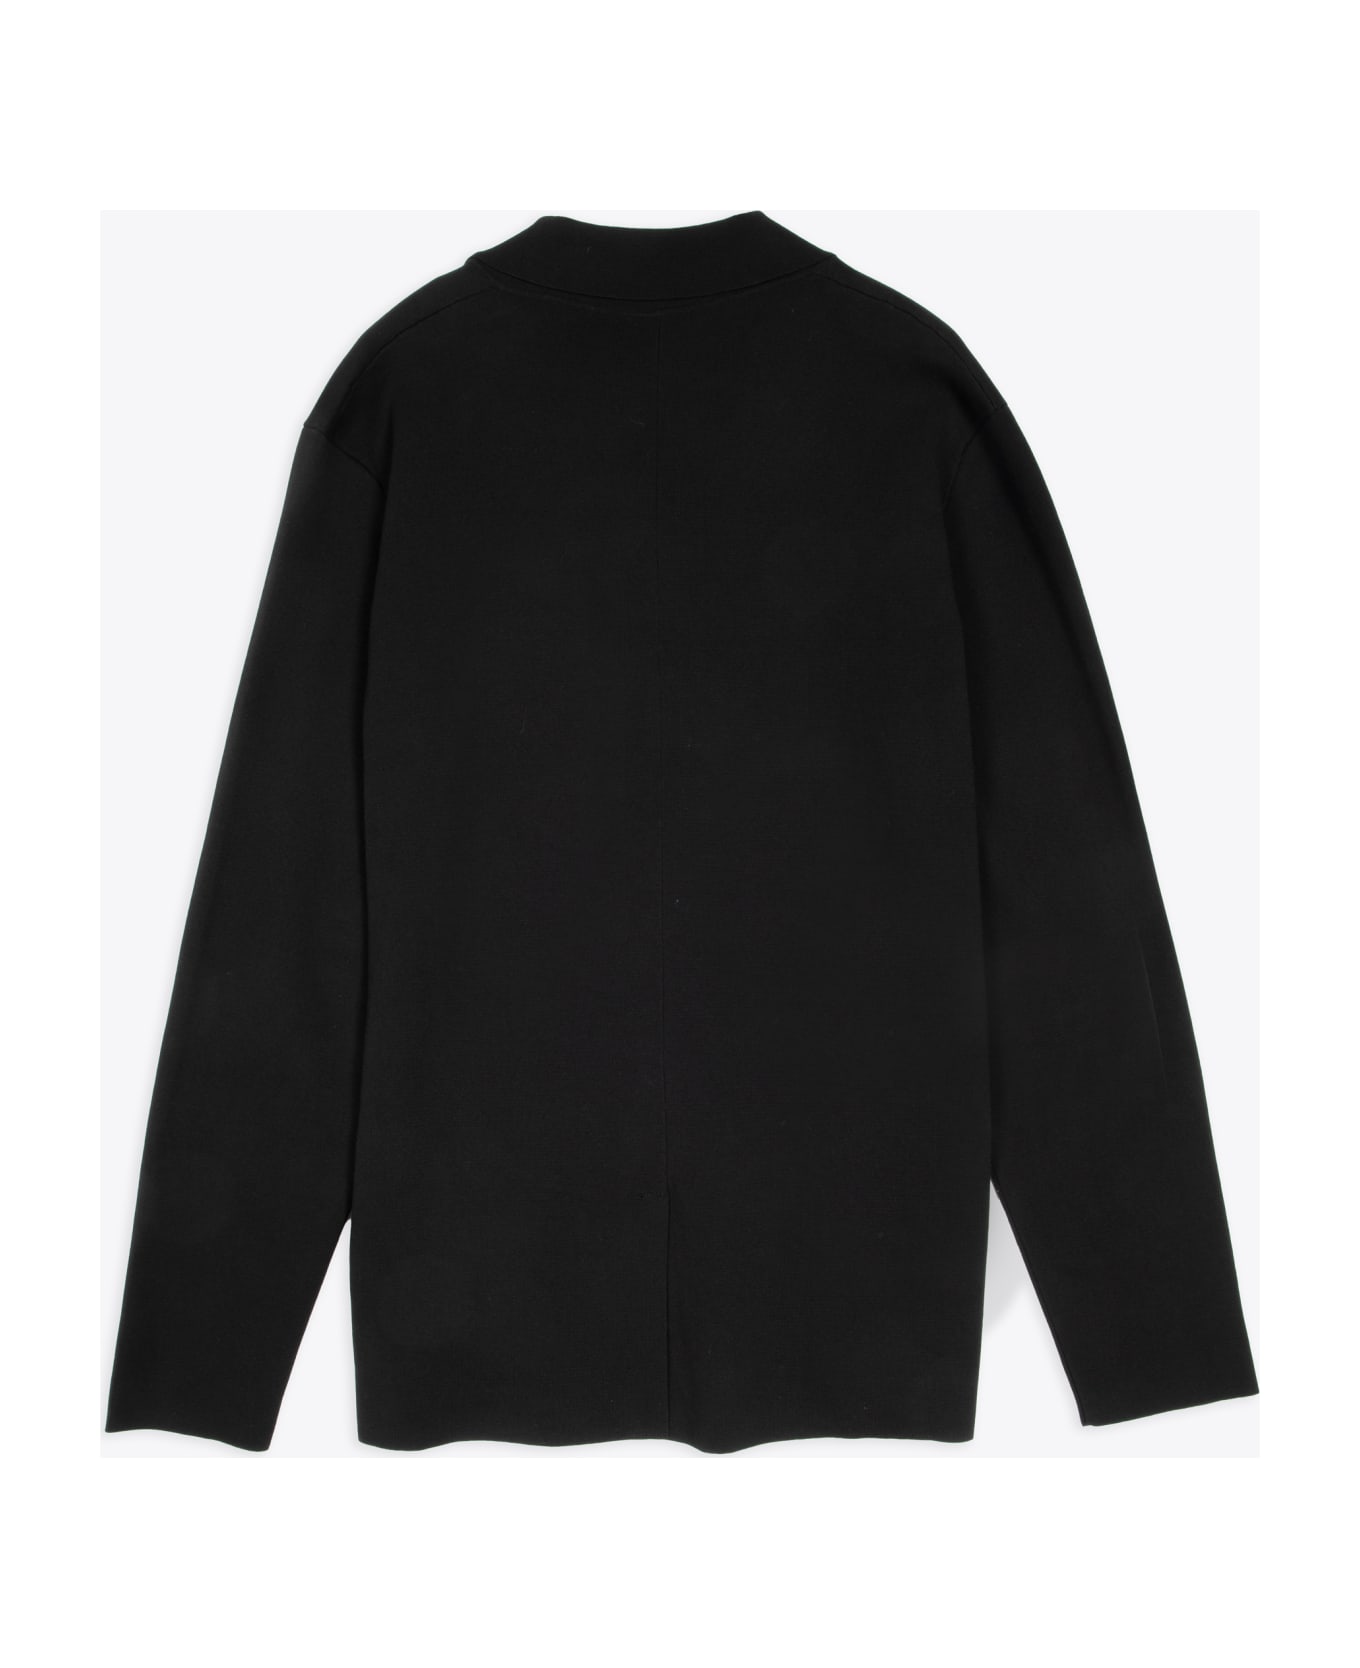 Roberto Collina Giacca Revers Black cotton knit blazer with patch pockets - Nero ブレザー